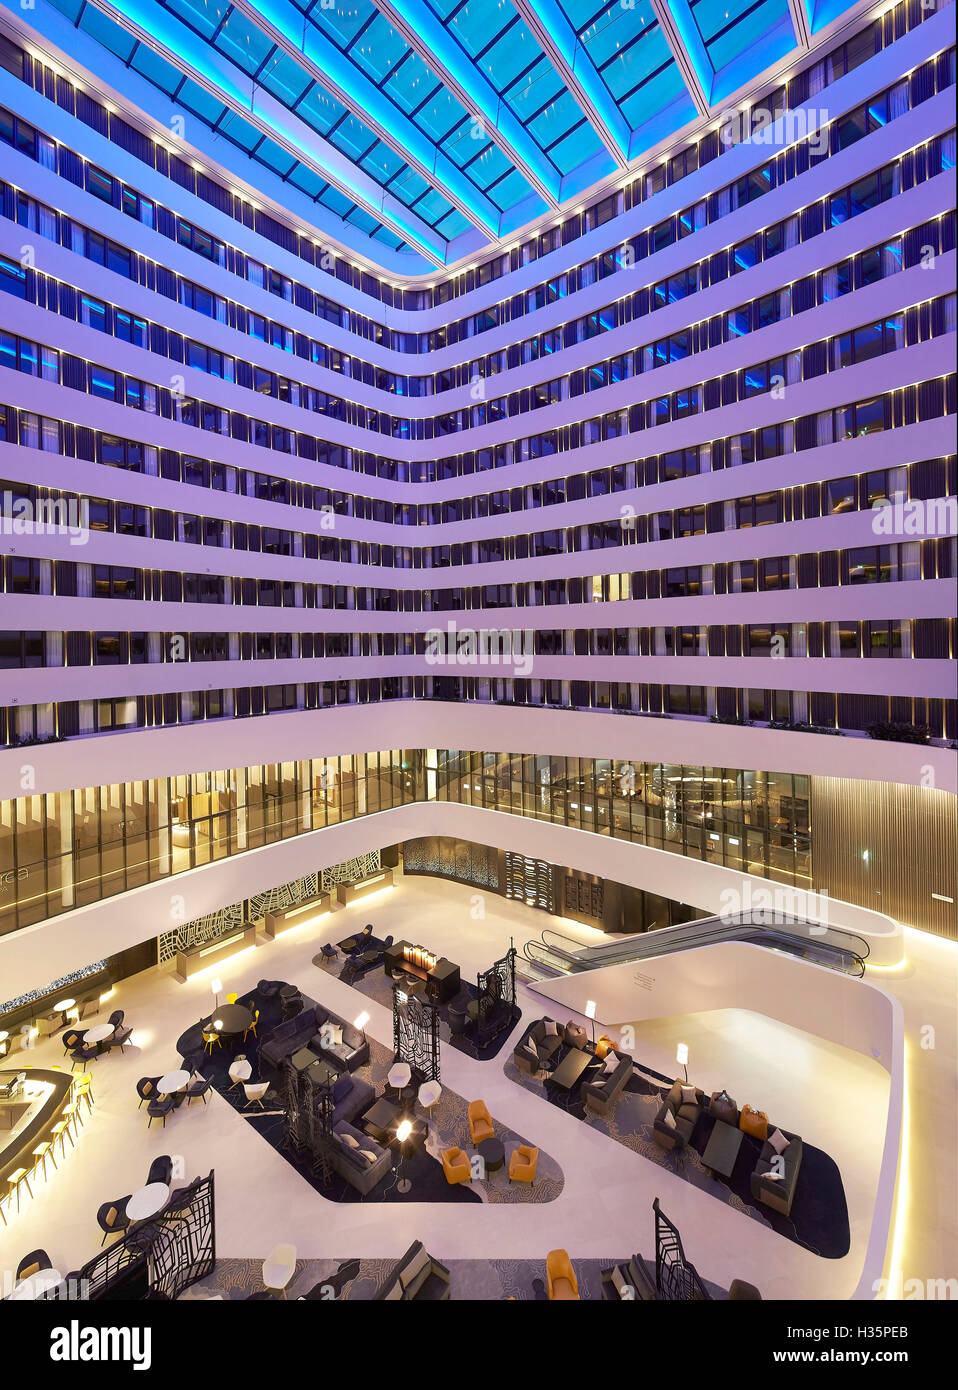 Atrium with mood lighting. Hilton Amsterdam Airport Schiphol, Amsterdam, Netherlands. Architect: Mecanoo Architects, 2015. Stock Photo